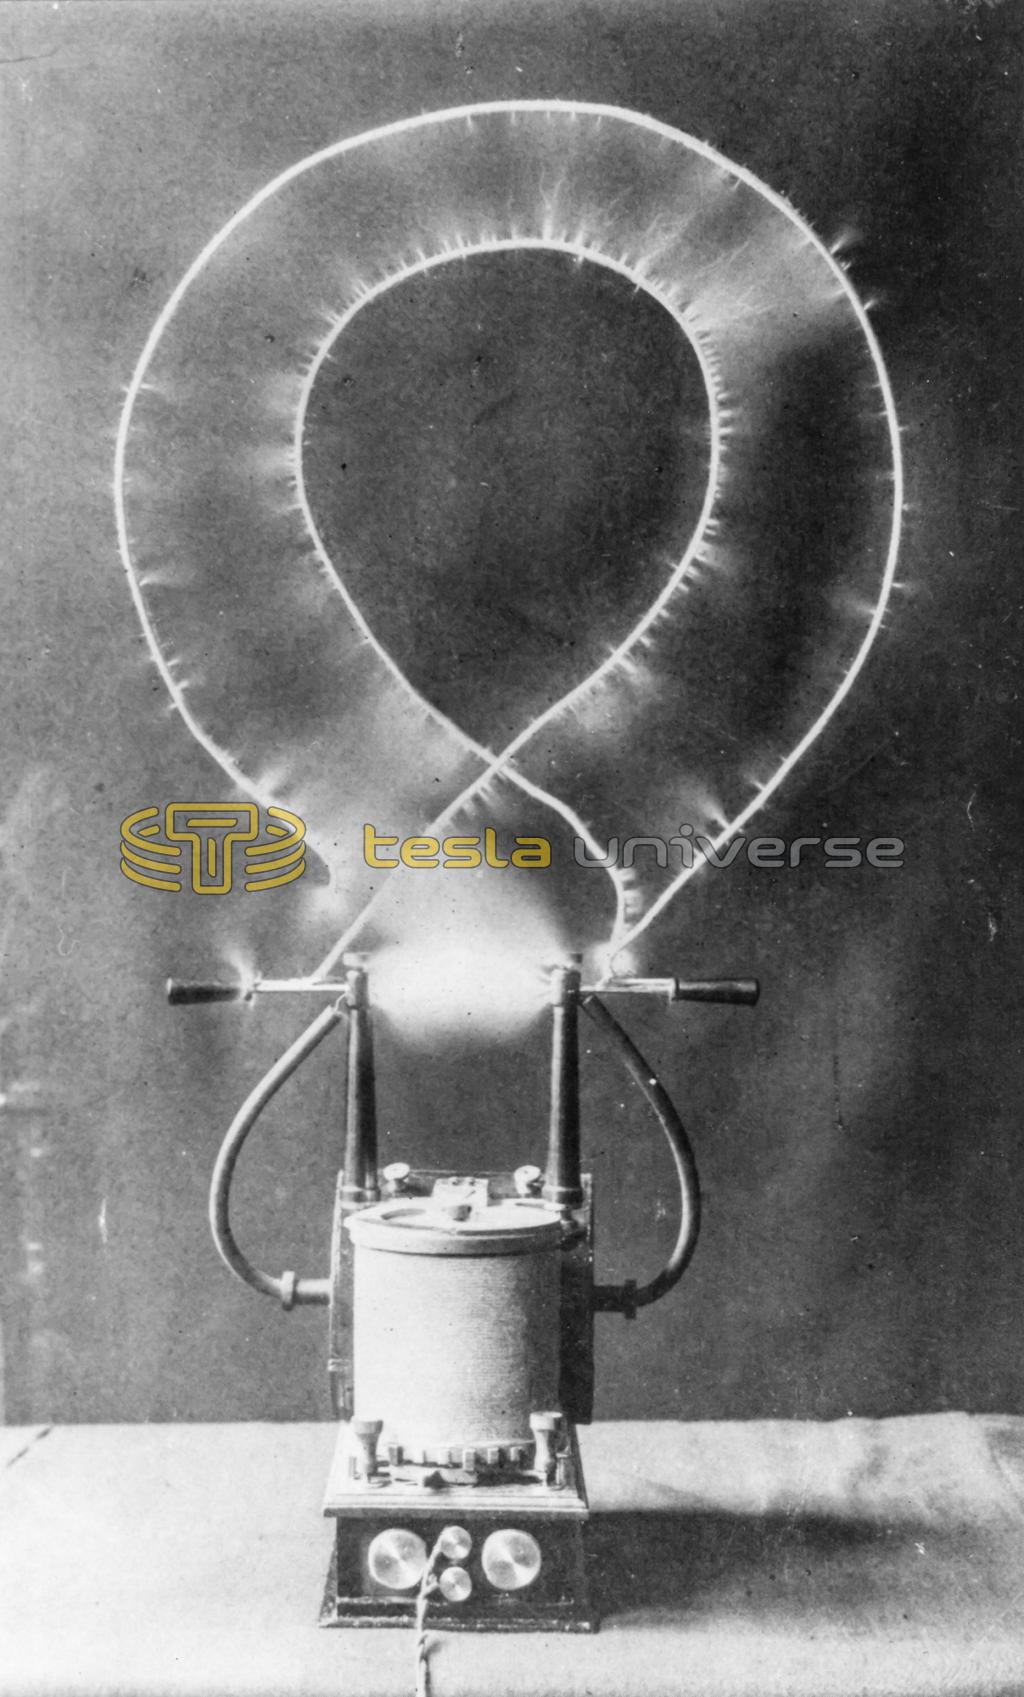 Nikola Tesla's Electrical Oscillator, energized with many fine discharges